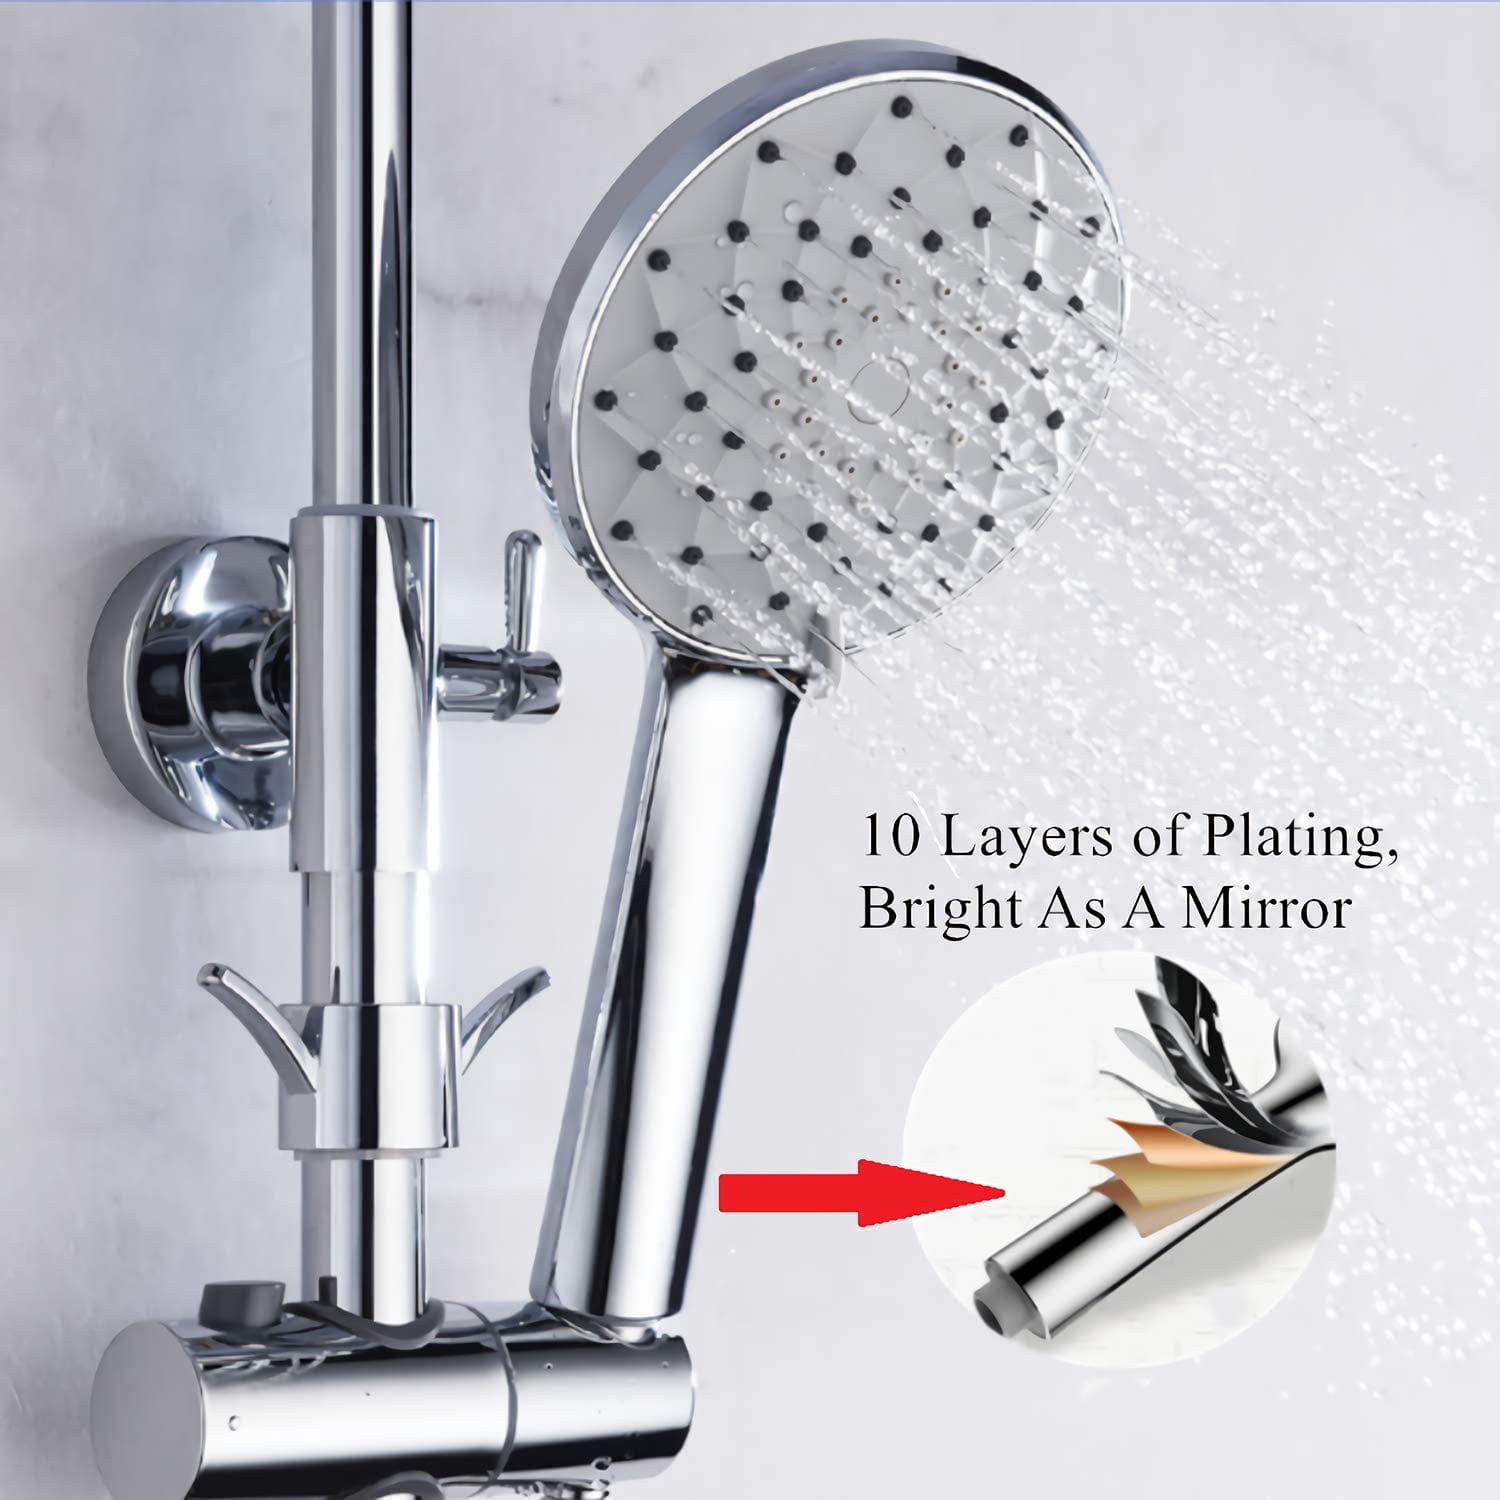 SADALAK Toilet Bidet Sprayer Attachment Self-cleaning Adjustable Water Pressure 